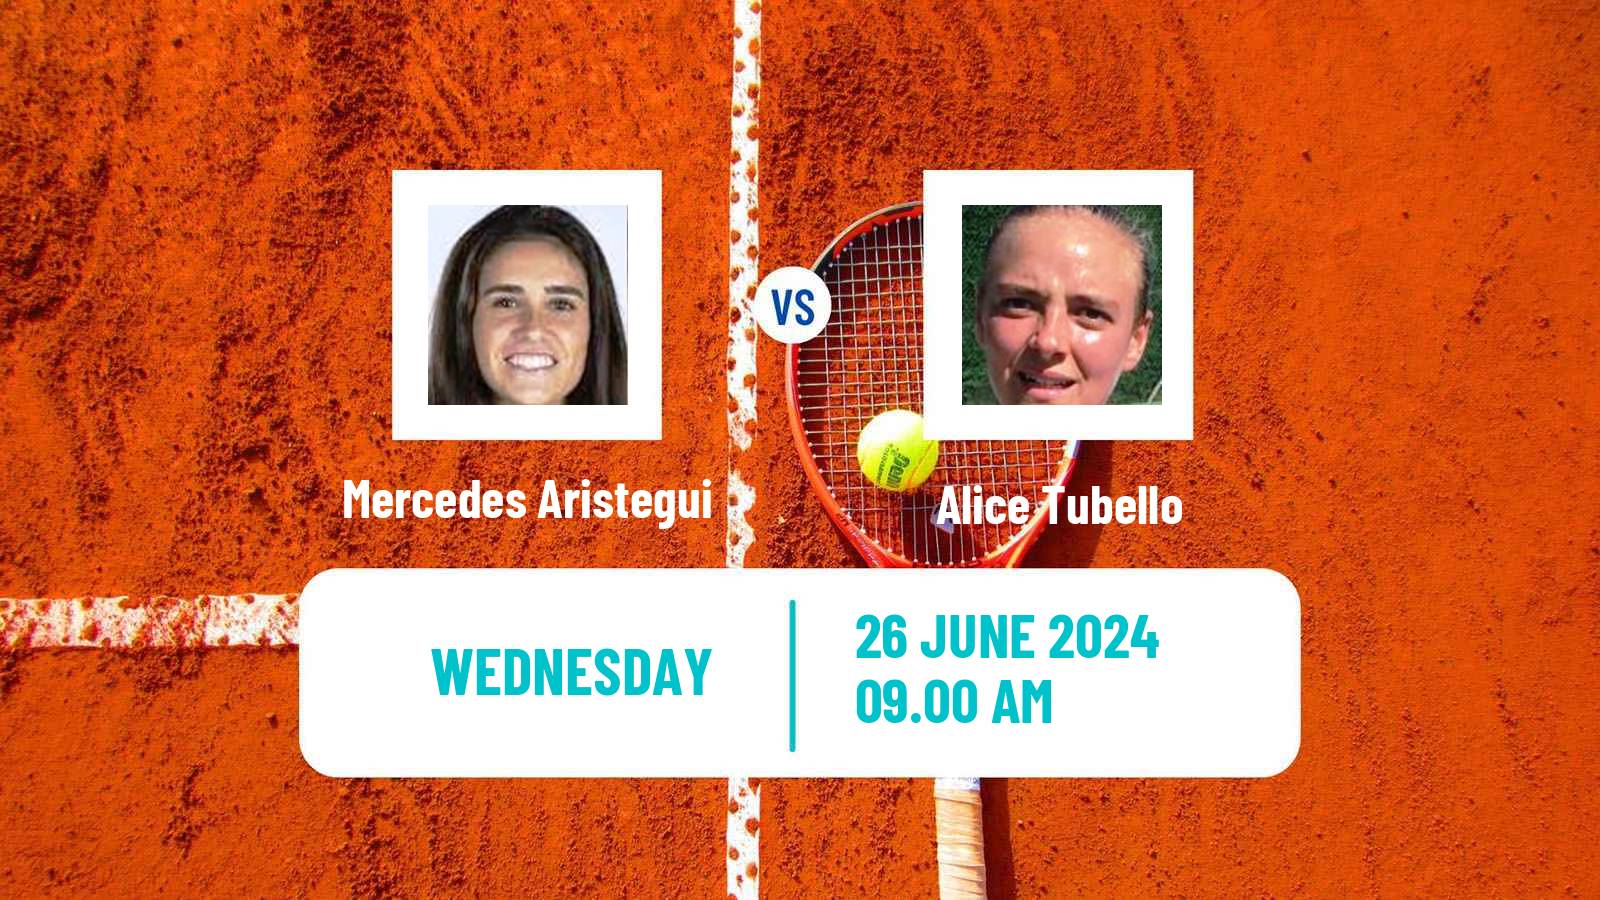 Tennis ITF W35 Perigueux Women Mercedes Aristegui - Alice Tubello